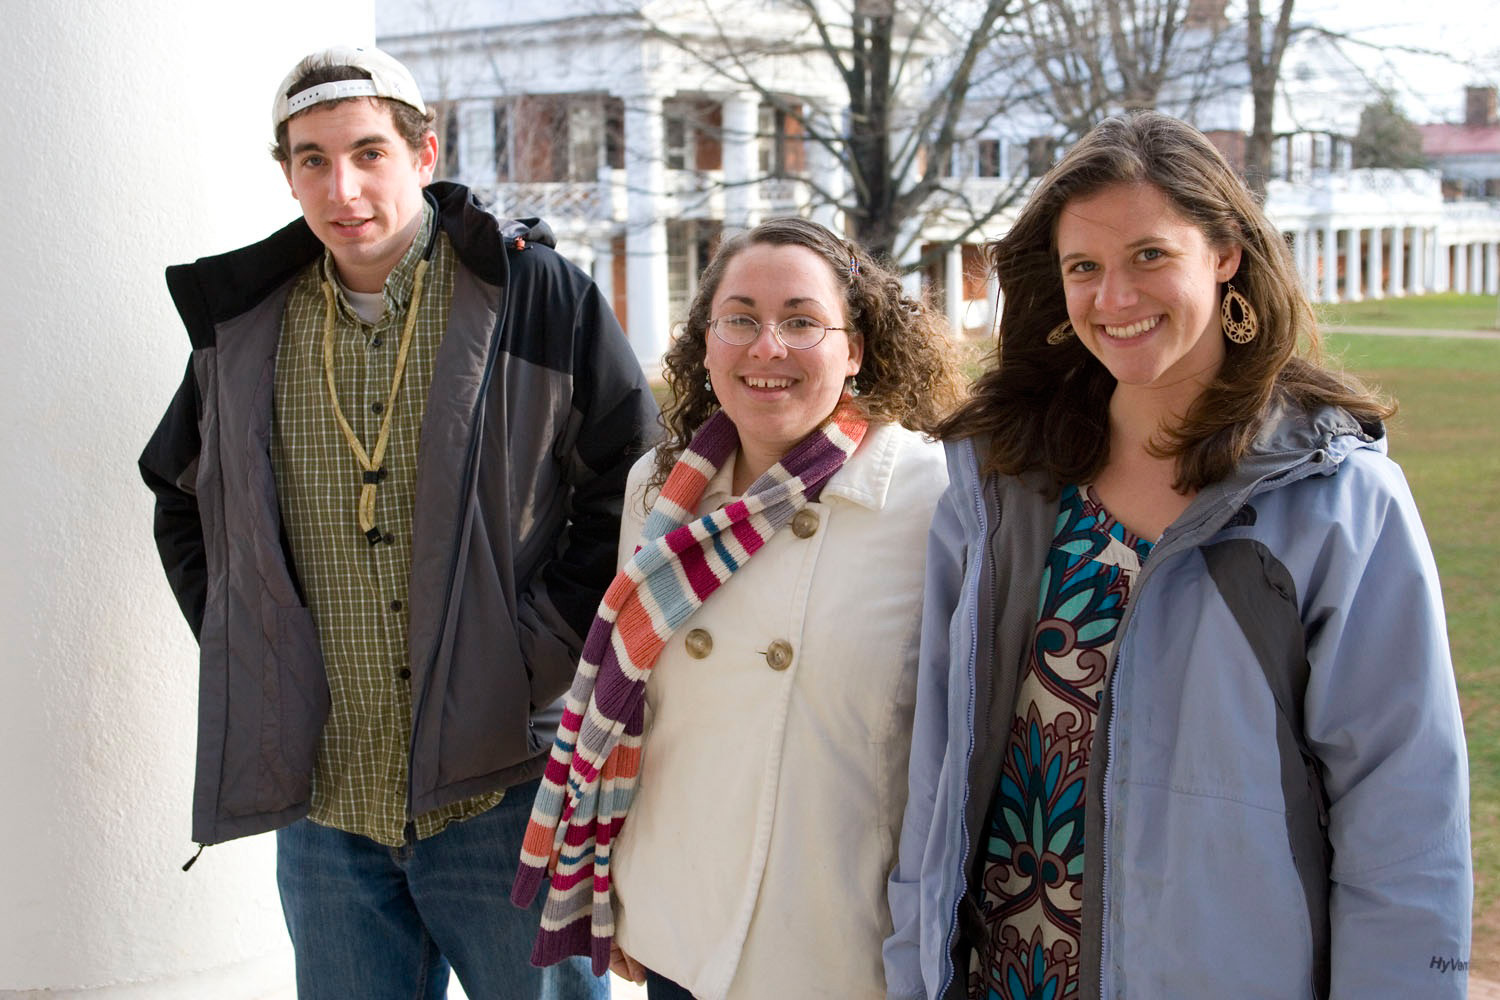 Group photo left to right: Patrick Higgins, Katie Yankoski and Miriam Todras